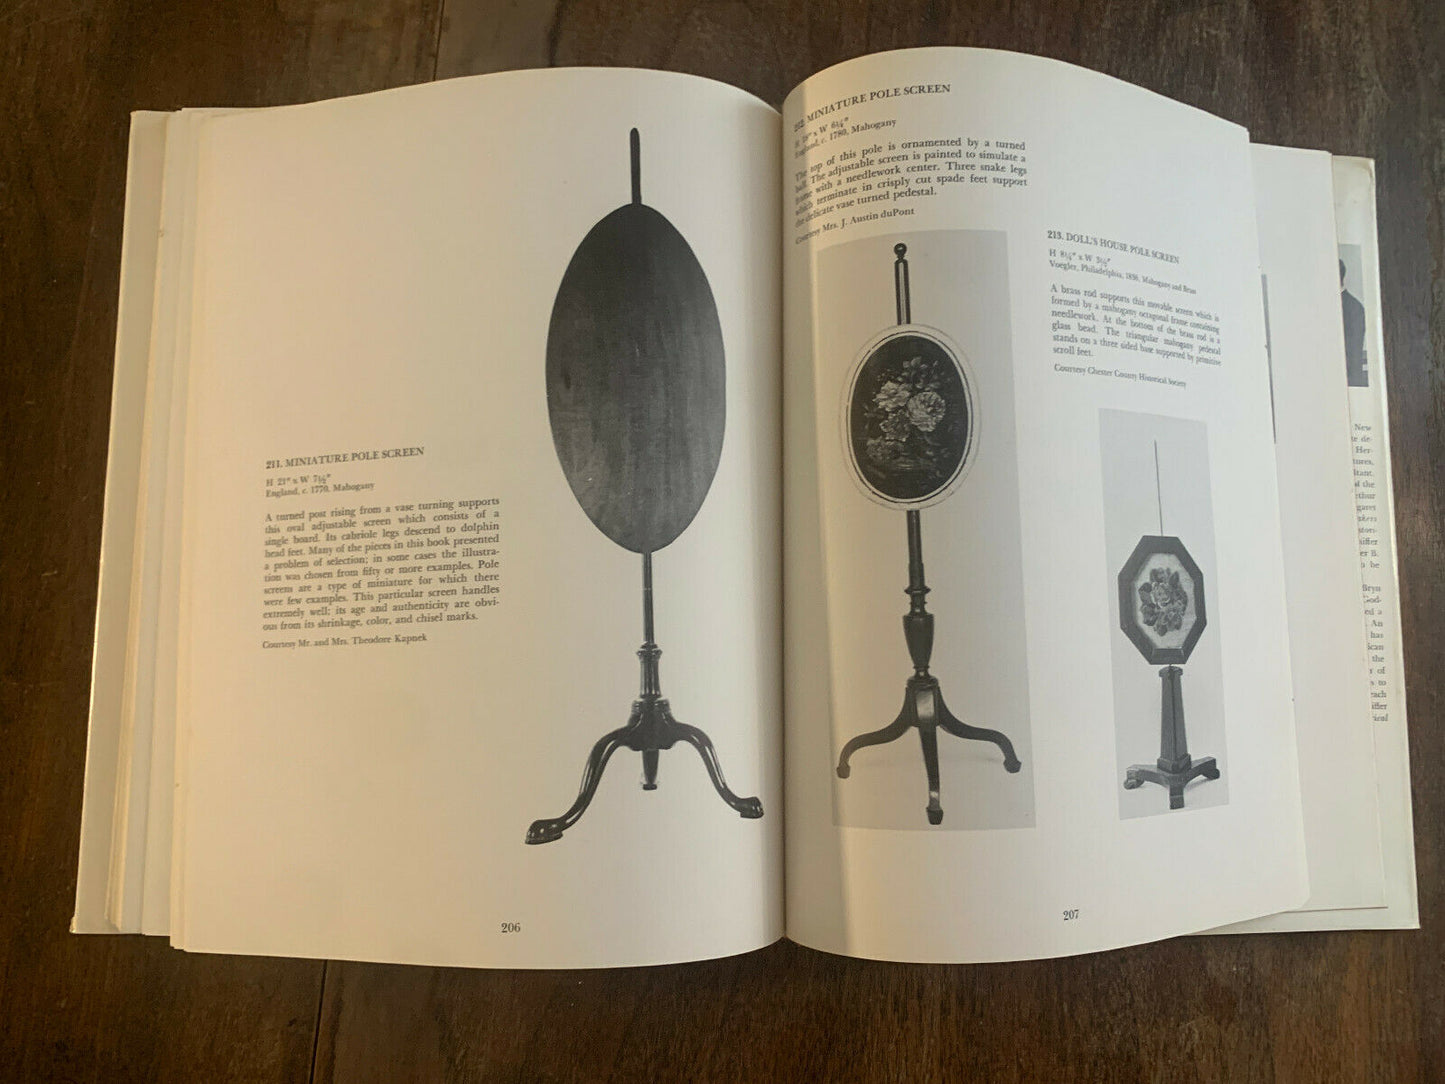 Minature Antique Furniture by Herbert F. & Peter B. Schiffer 1972